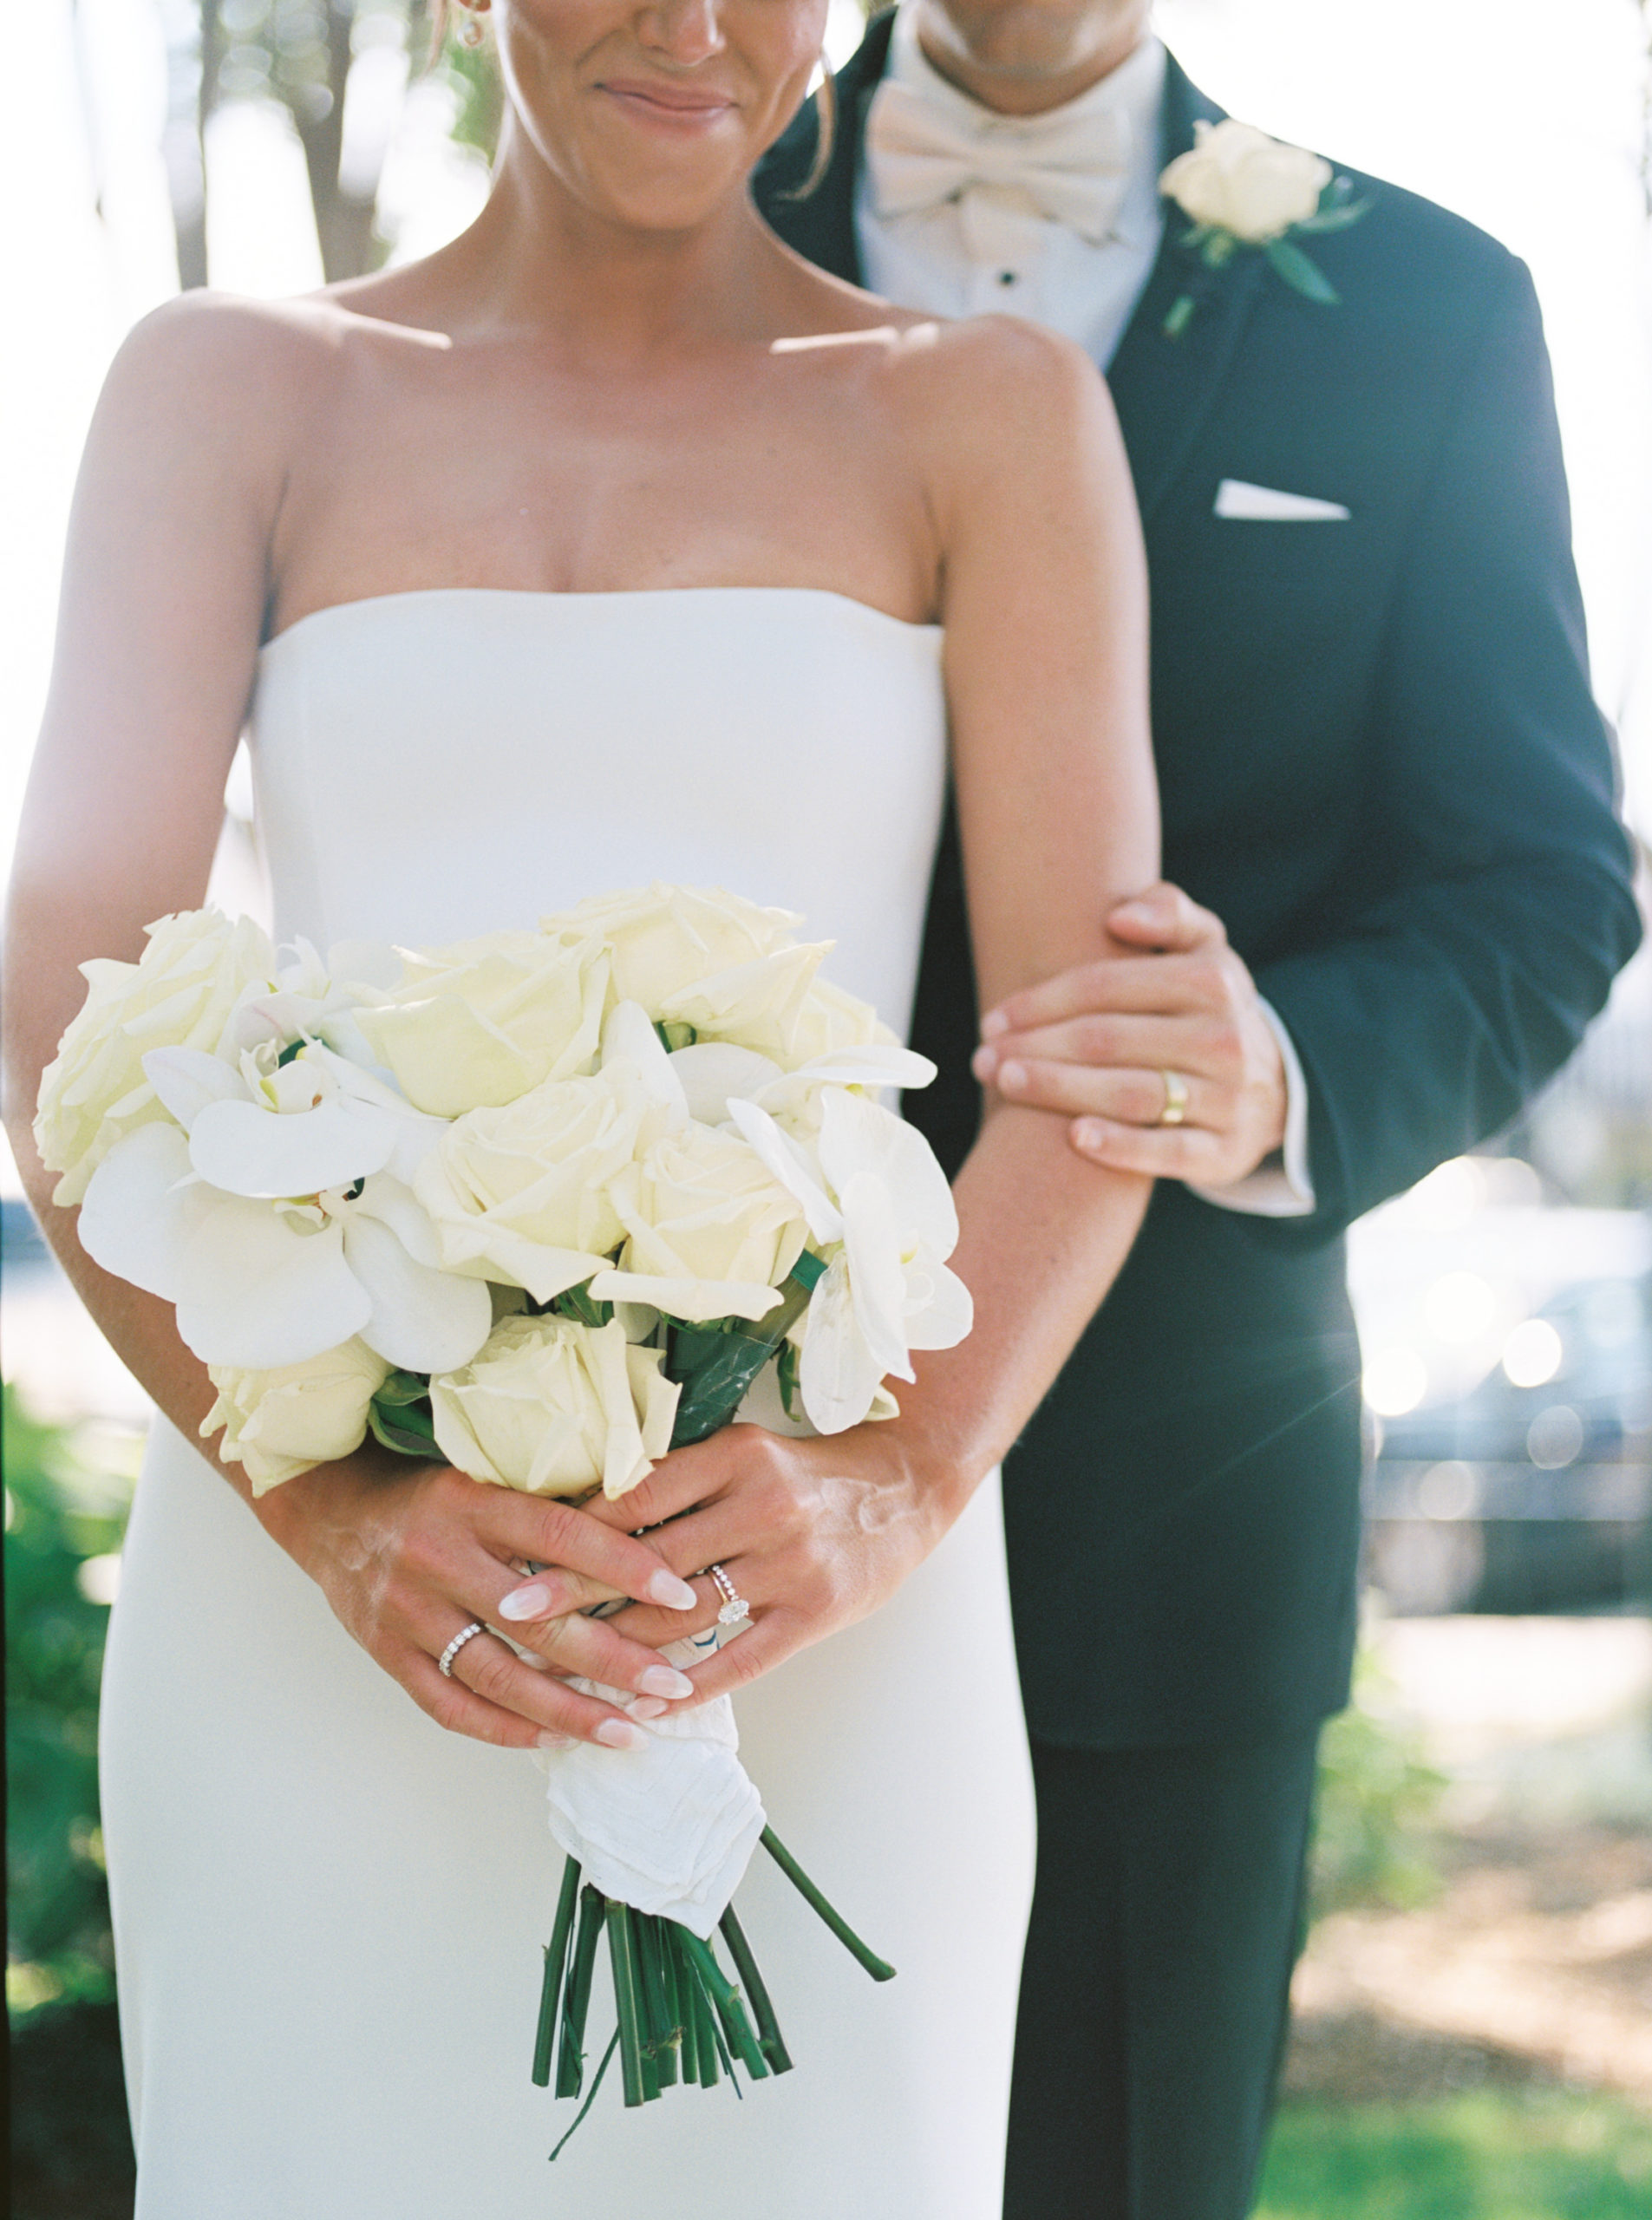 Atlanta Wedding Photographer,
Atlanta Film Photographer, Orchid and rose wedding bouquet